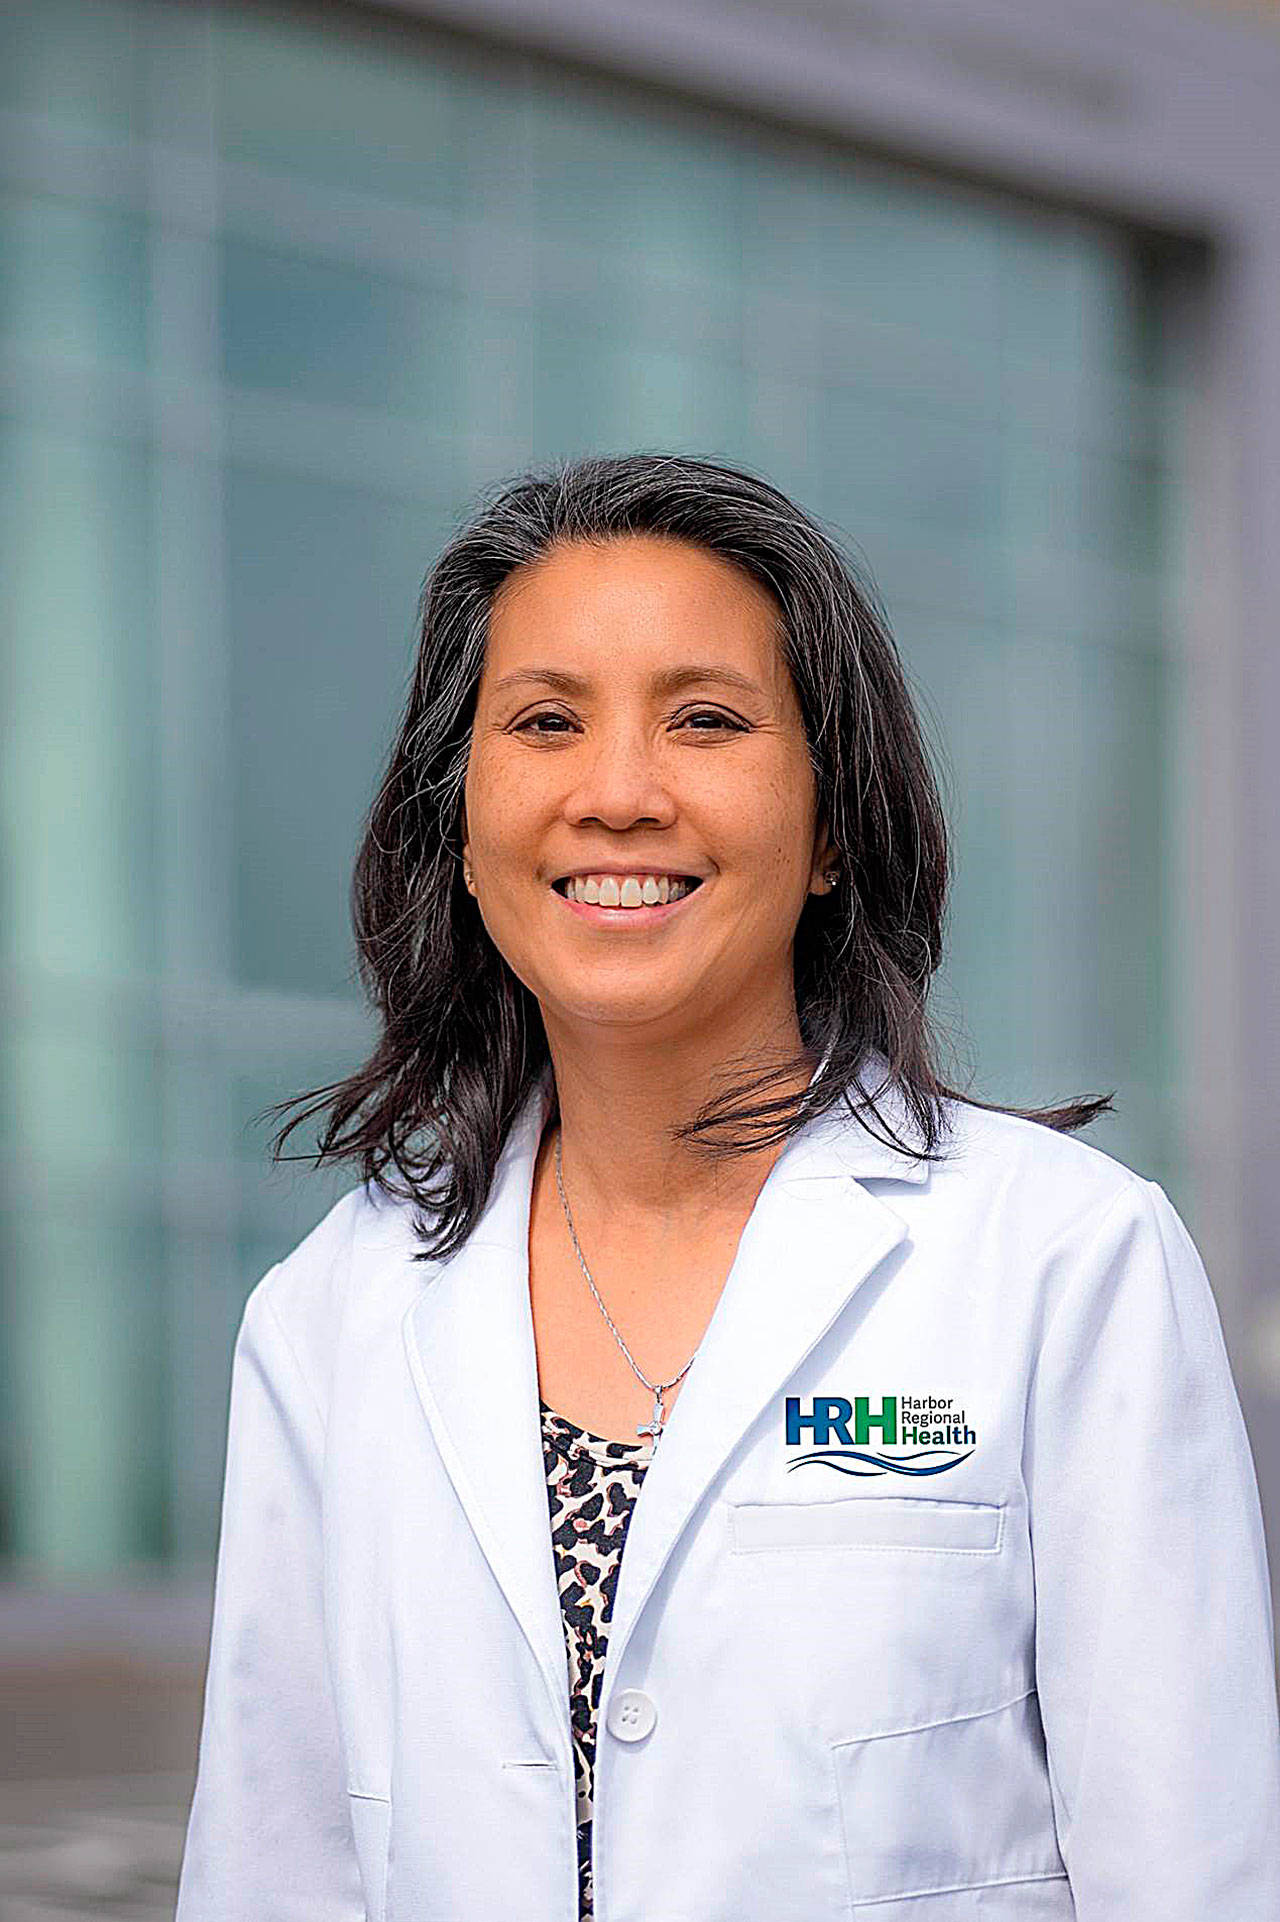 Dr. Anne Marie Wong sports the new Harbor Regional Health logo. (CHRIS MAJORS | GRAYS HARBOR COMMUNITY HOSPITAL)